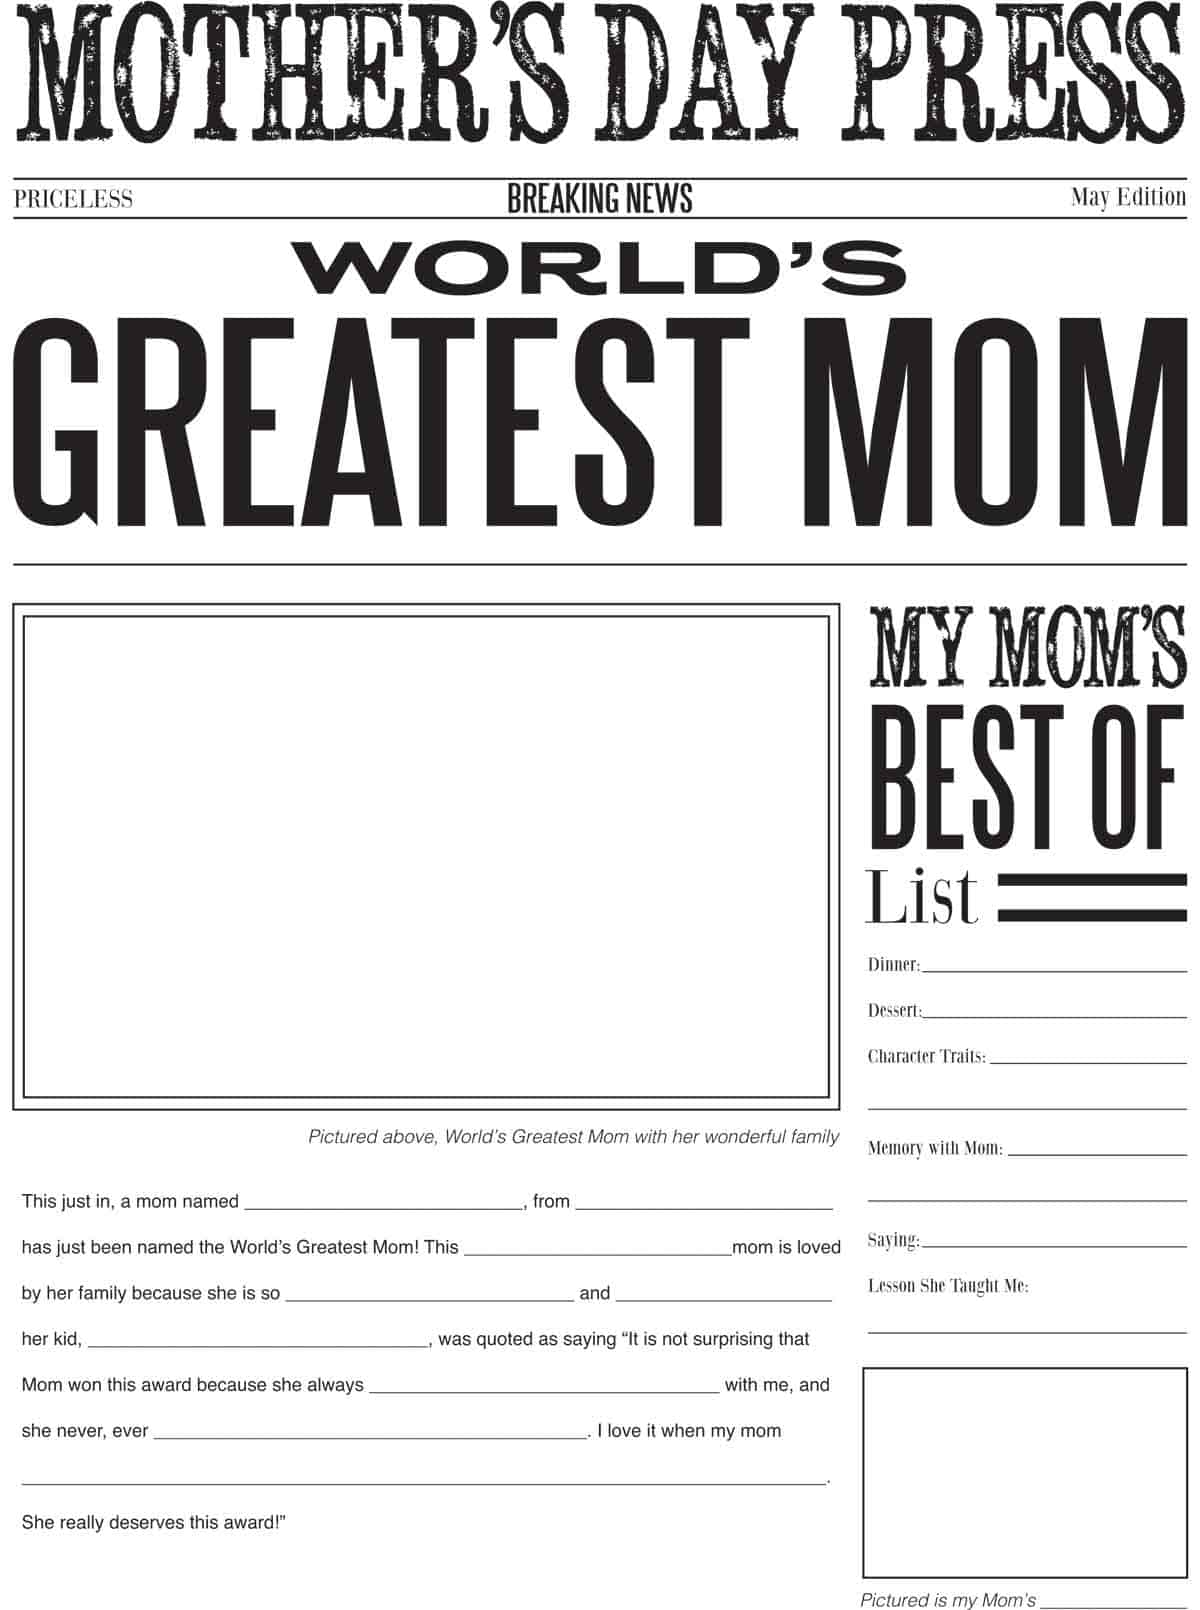 Mother's Day Press newspaper printable